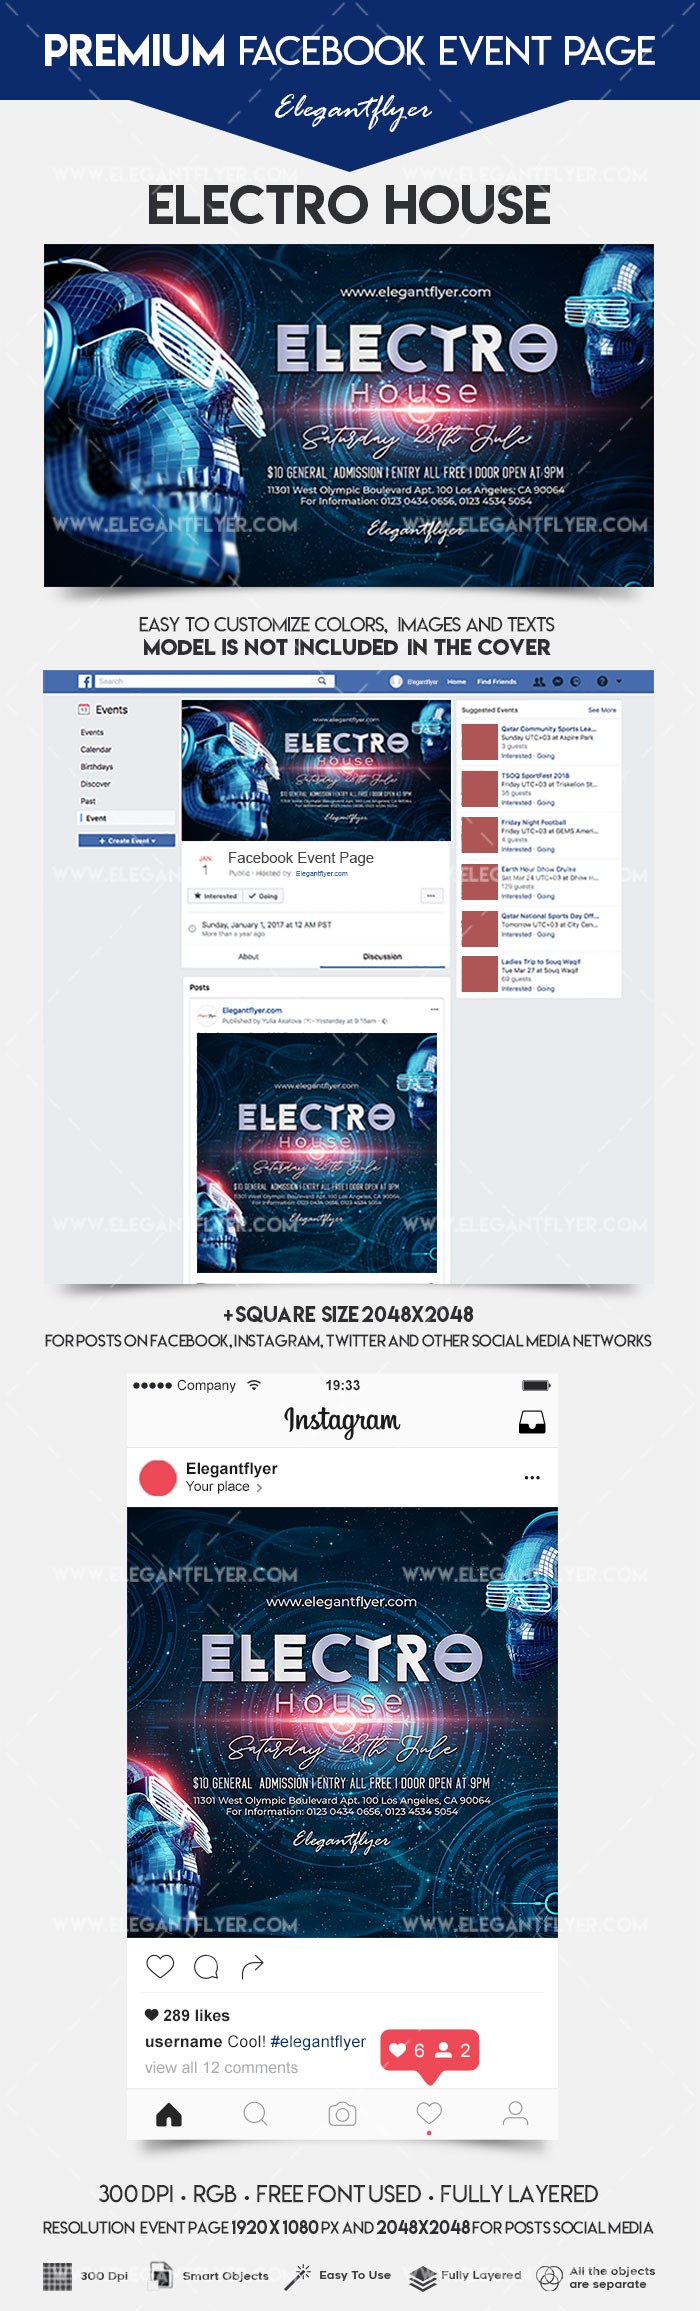 Electro House Facebook by ElegantFlyer